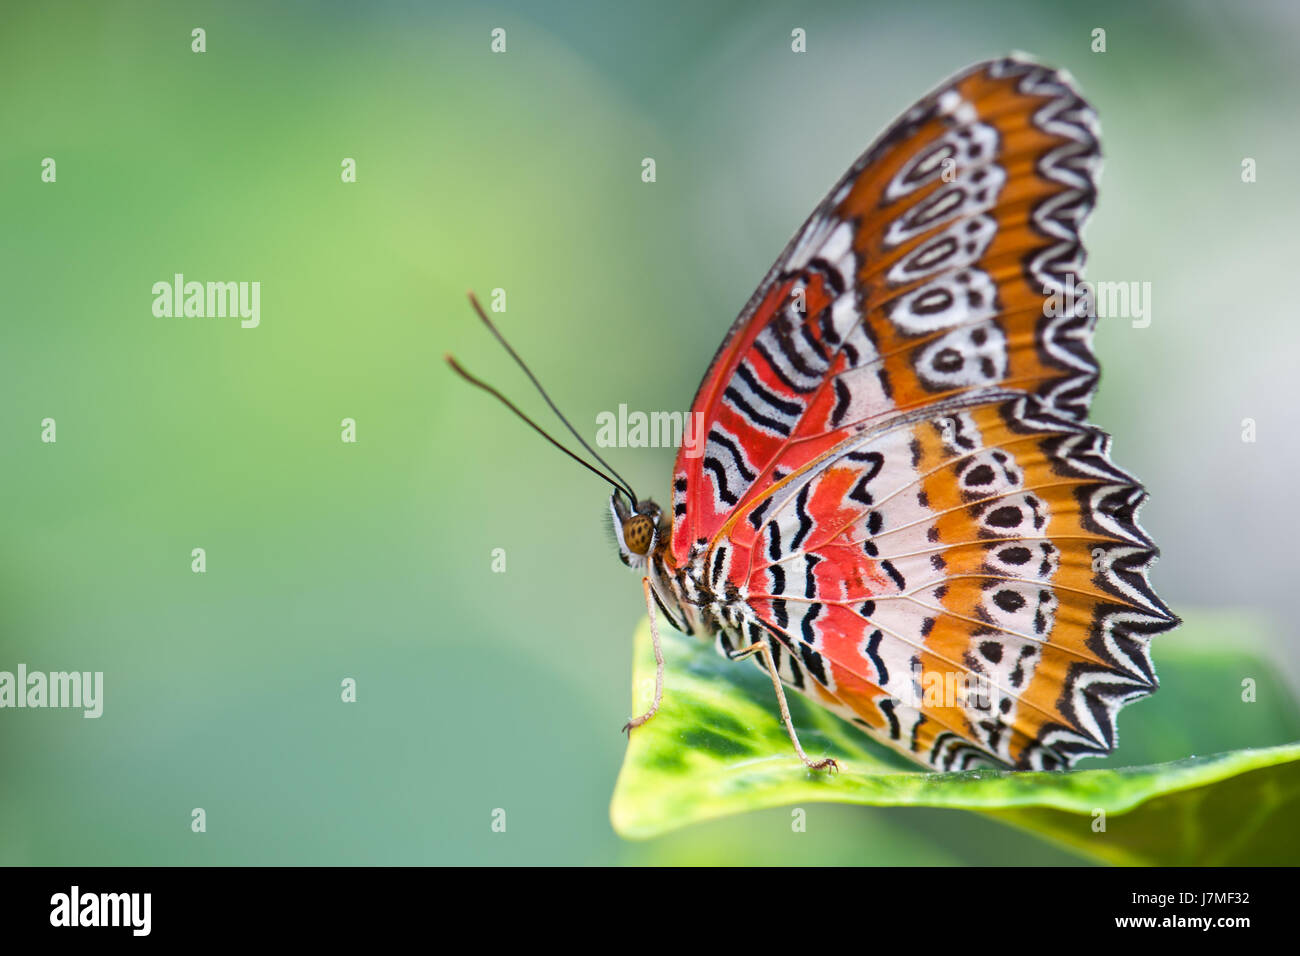 Makro Nahaufnahme Makro Aufnahme hautnah Ansicht Insekt Schmetterling Nachtfalter Farbe Stockfoto